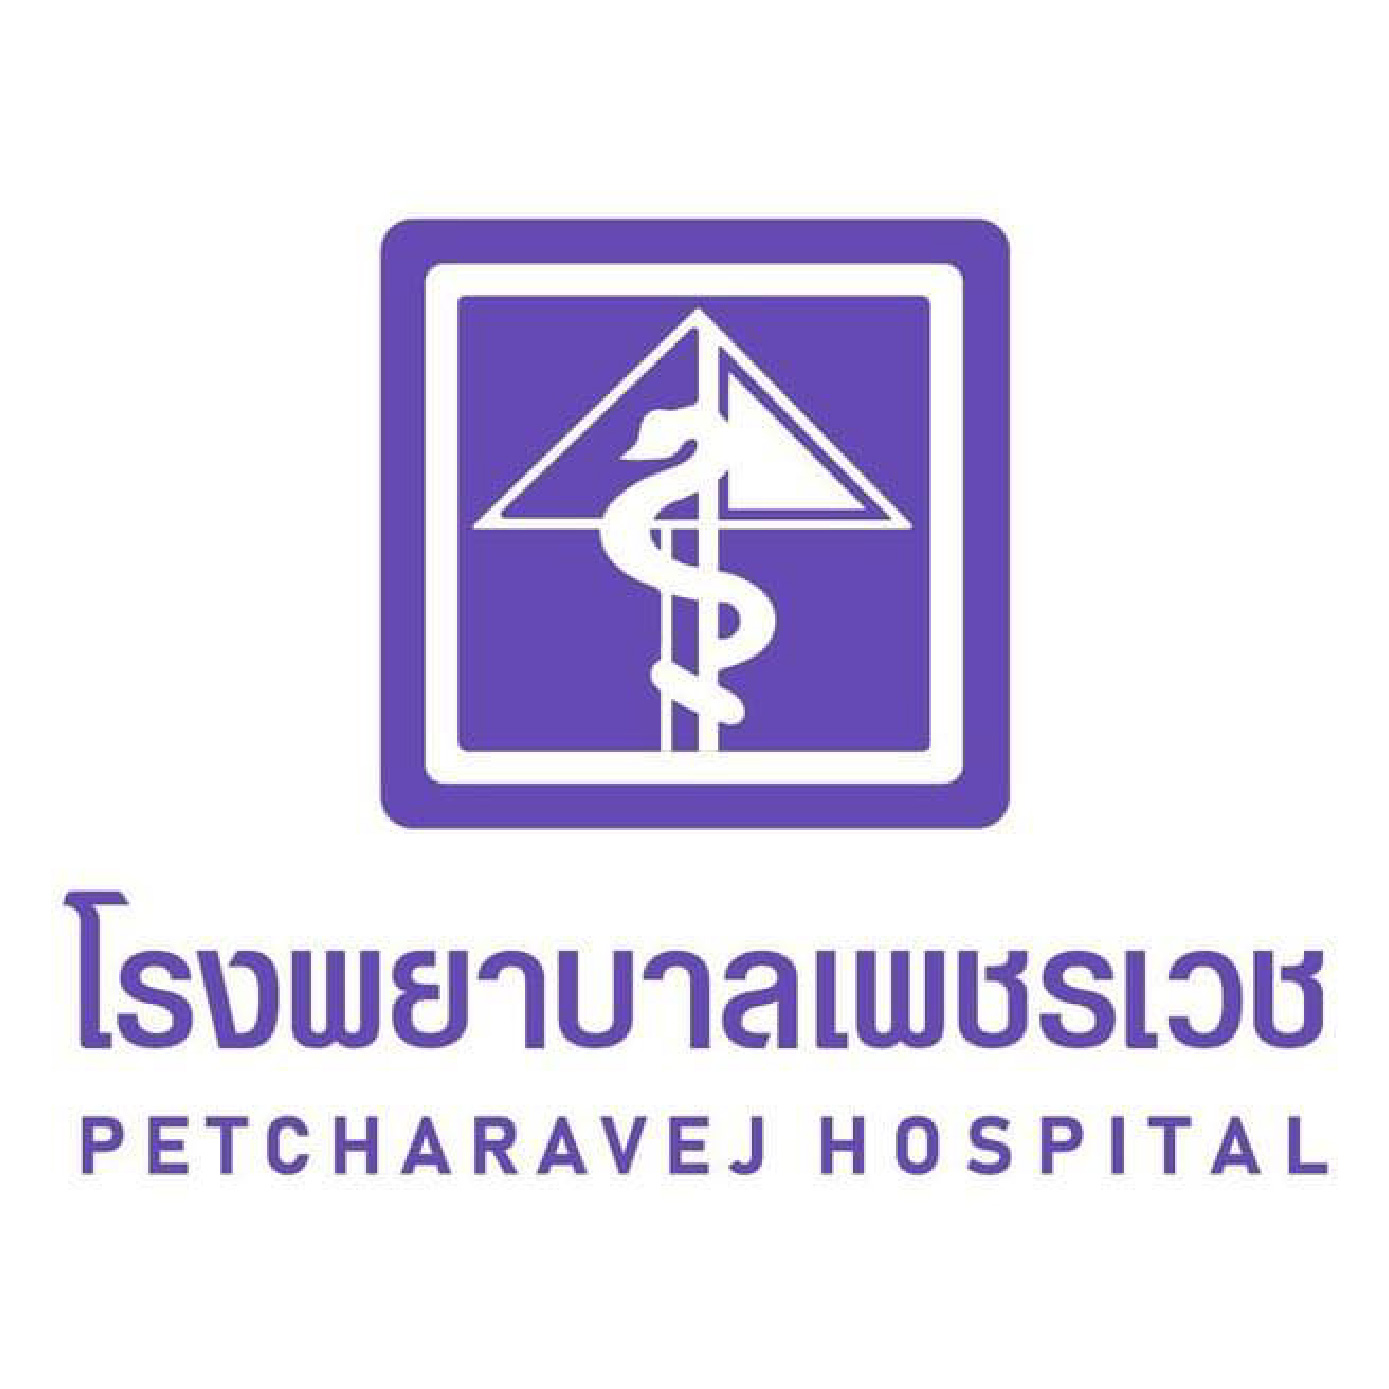 Petcharavej Hospital 01